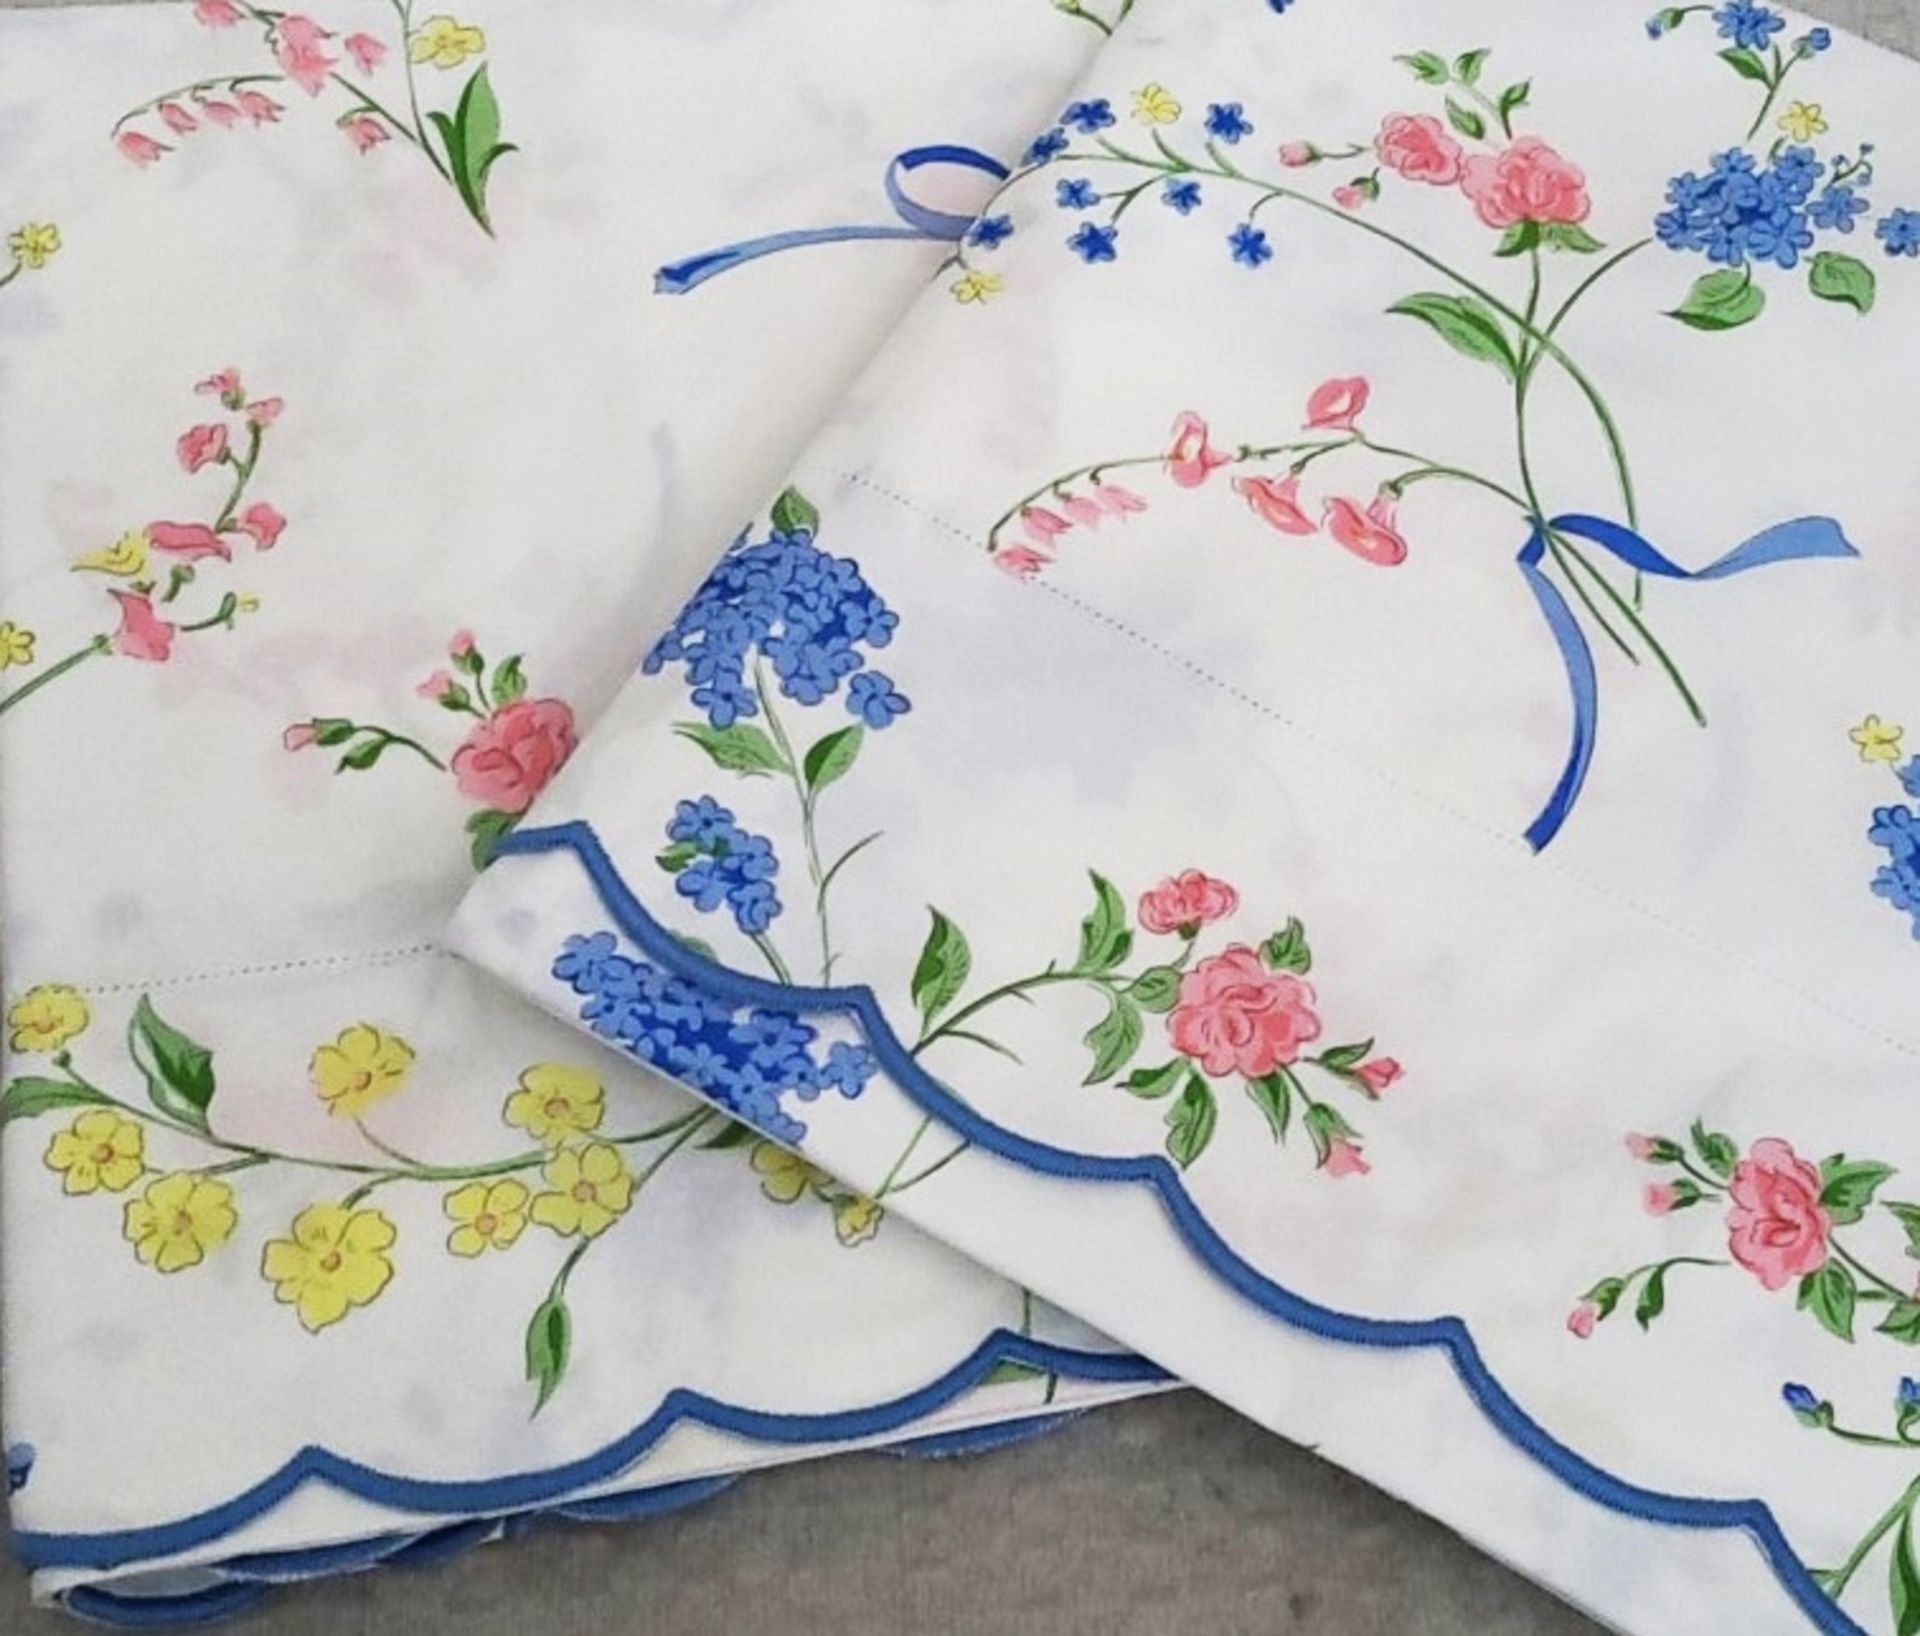 Set Of 2 x PRATESI 'Cina' Floral Print Luxurious Italian Made W/ Egyptian Cotton Sham 65x65cm